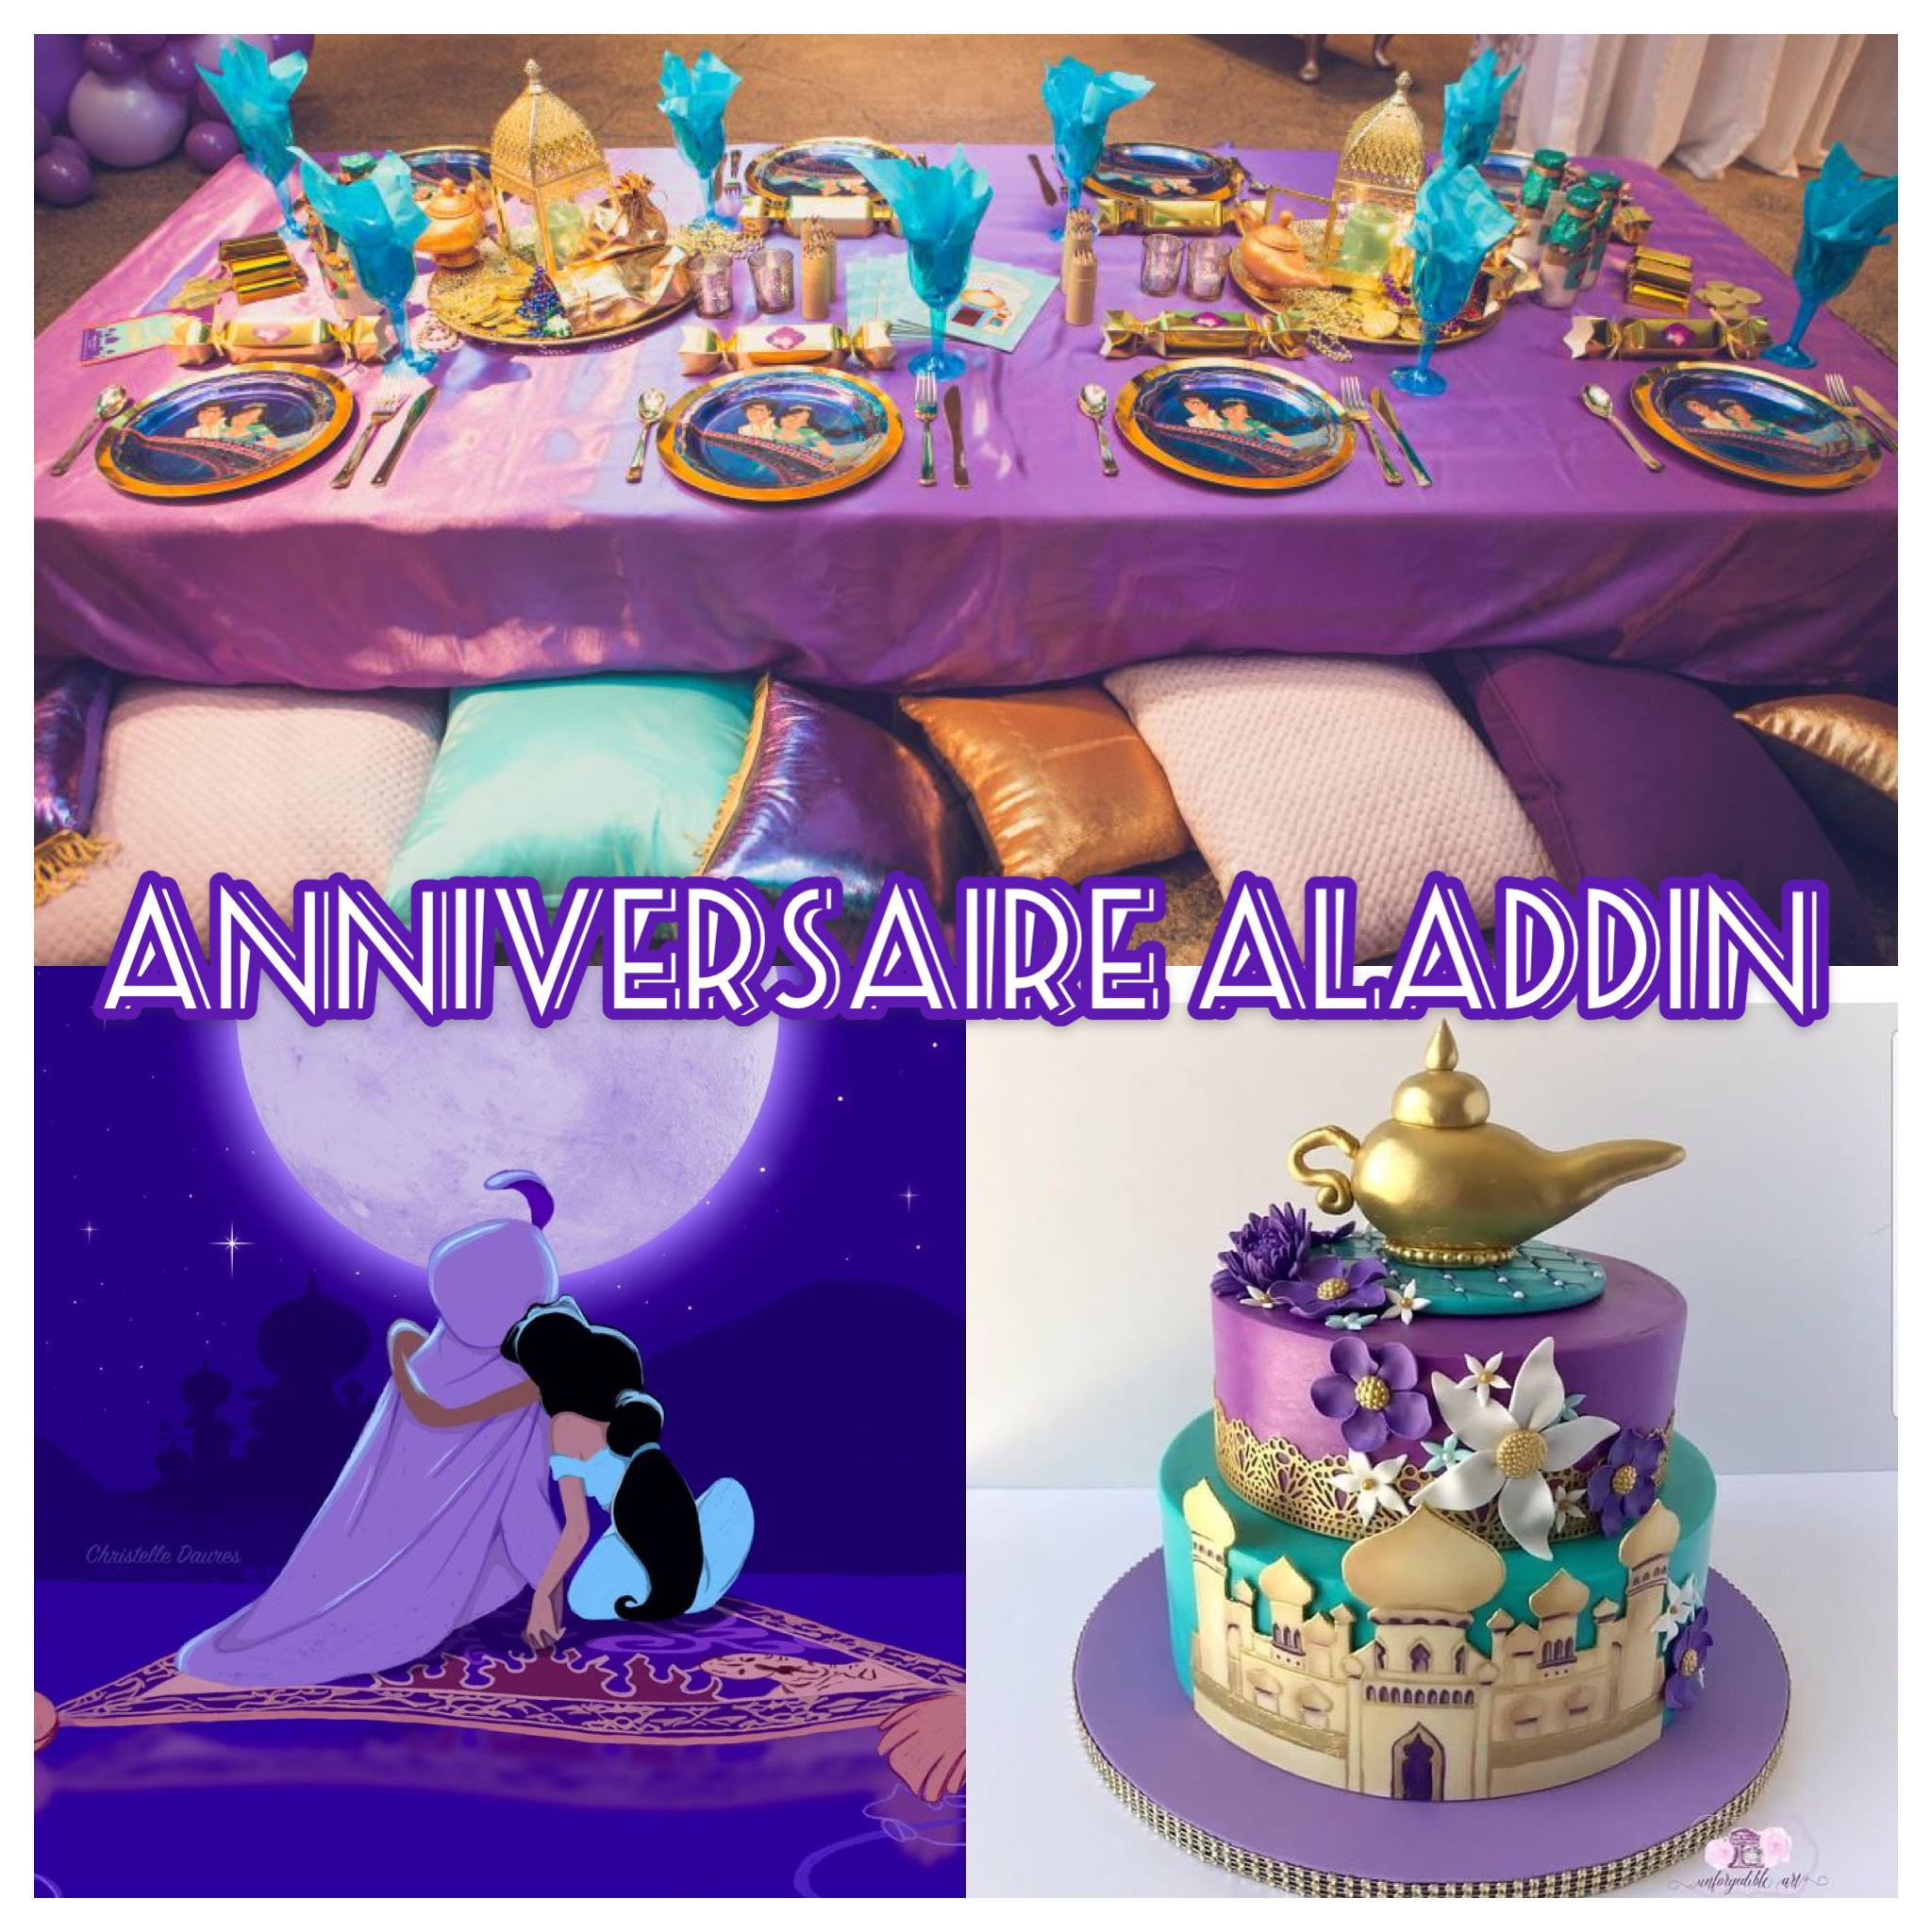 Anniversaire Aladdin et Jasmine